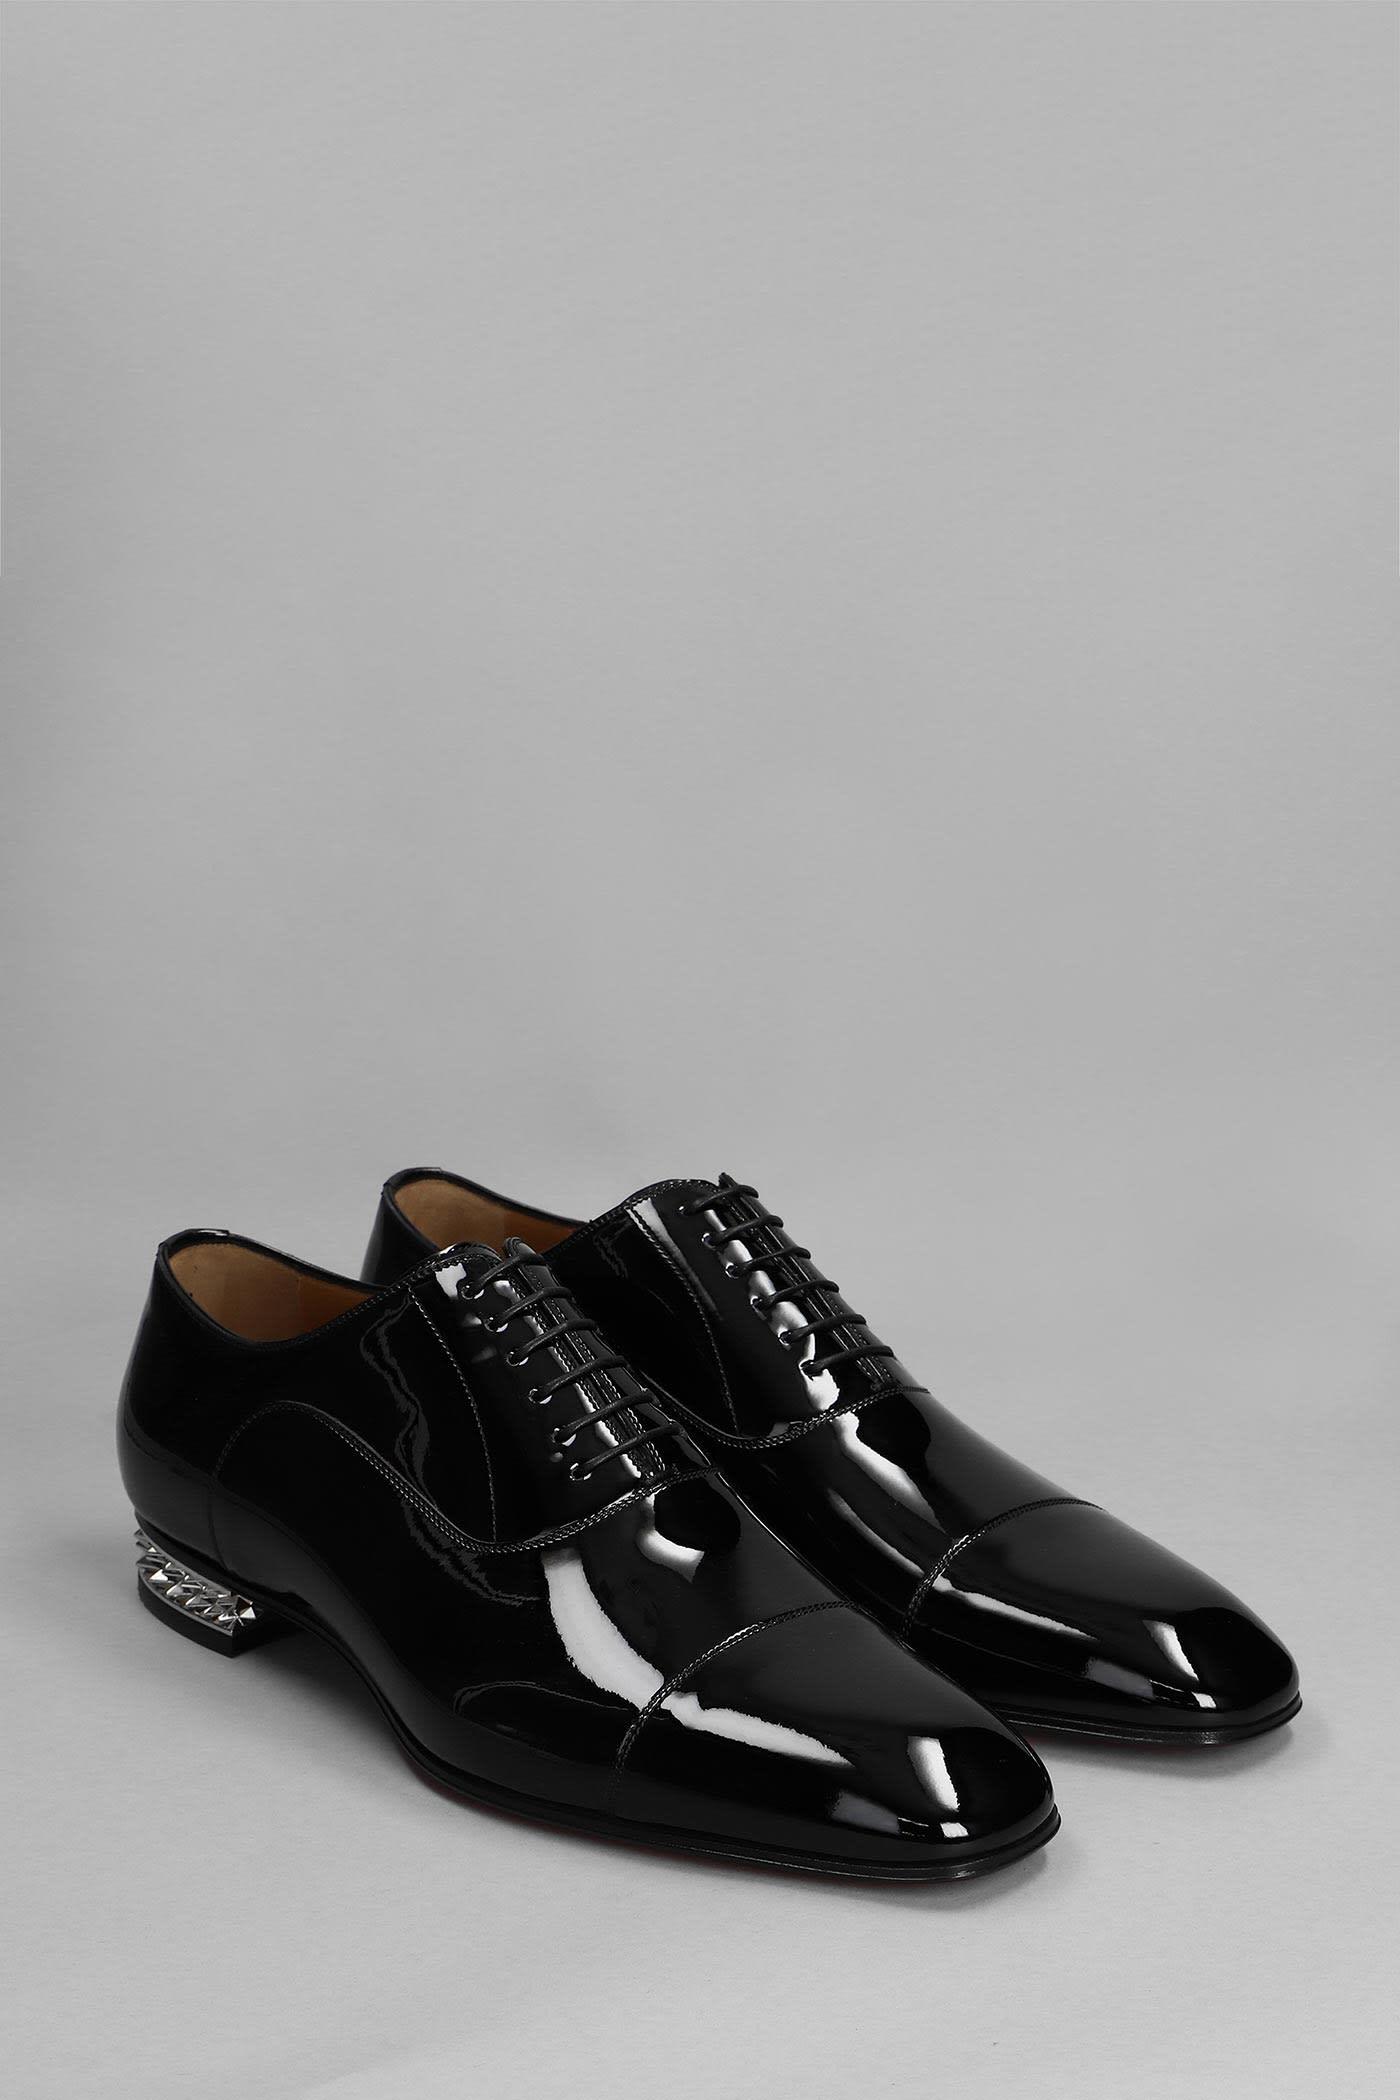 Greggo Black Patent leather - Men Shoes - Christian Louboutin